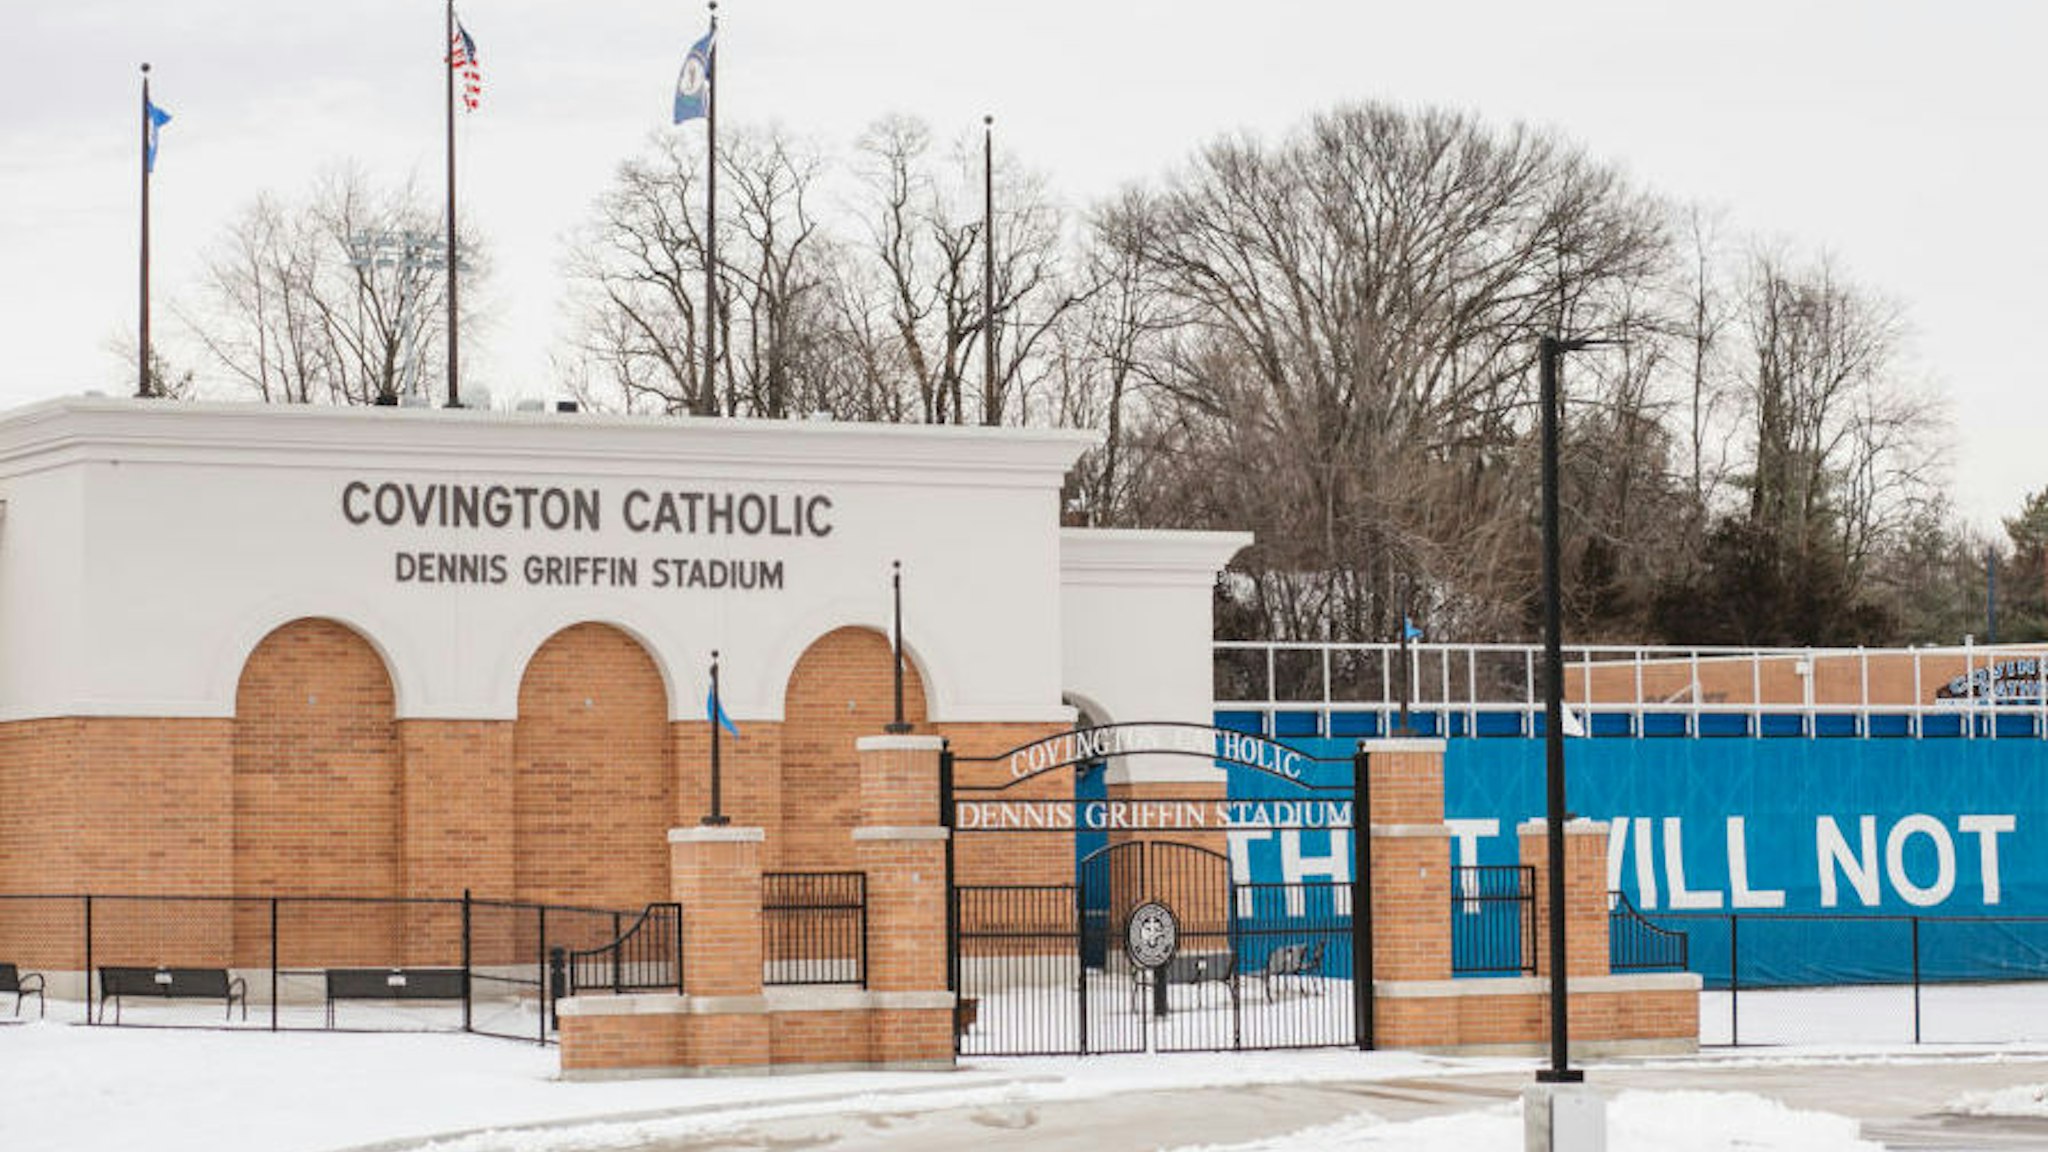 Covington Catholic High School was closed on January 22, 2019.